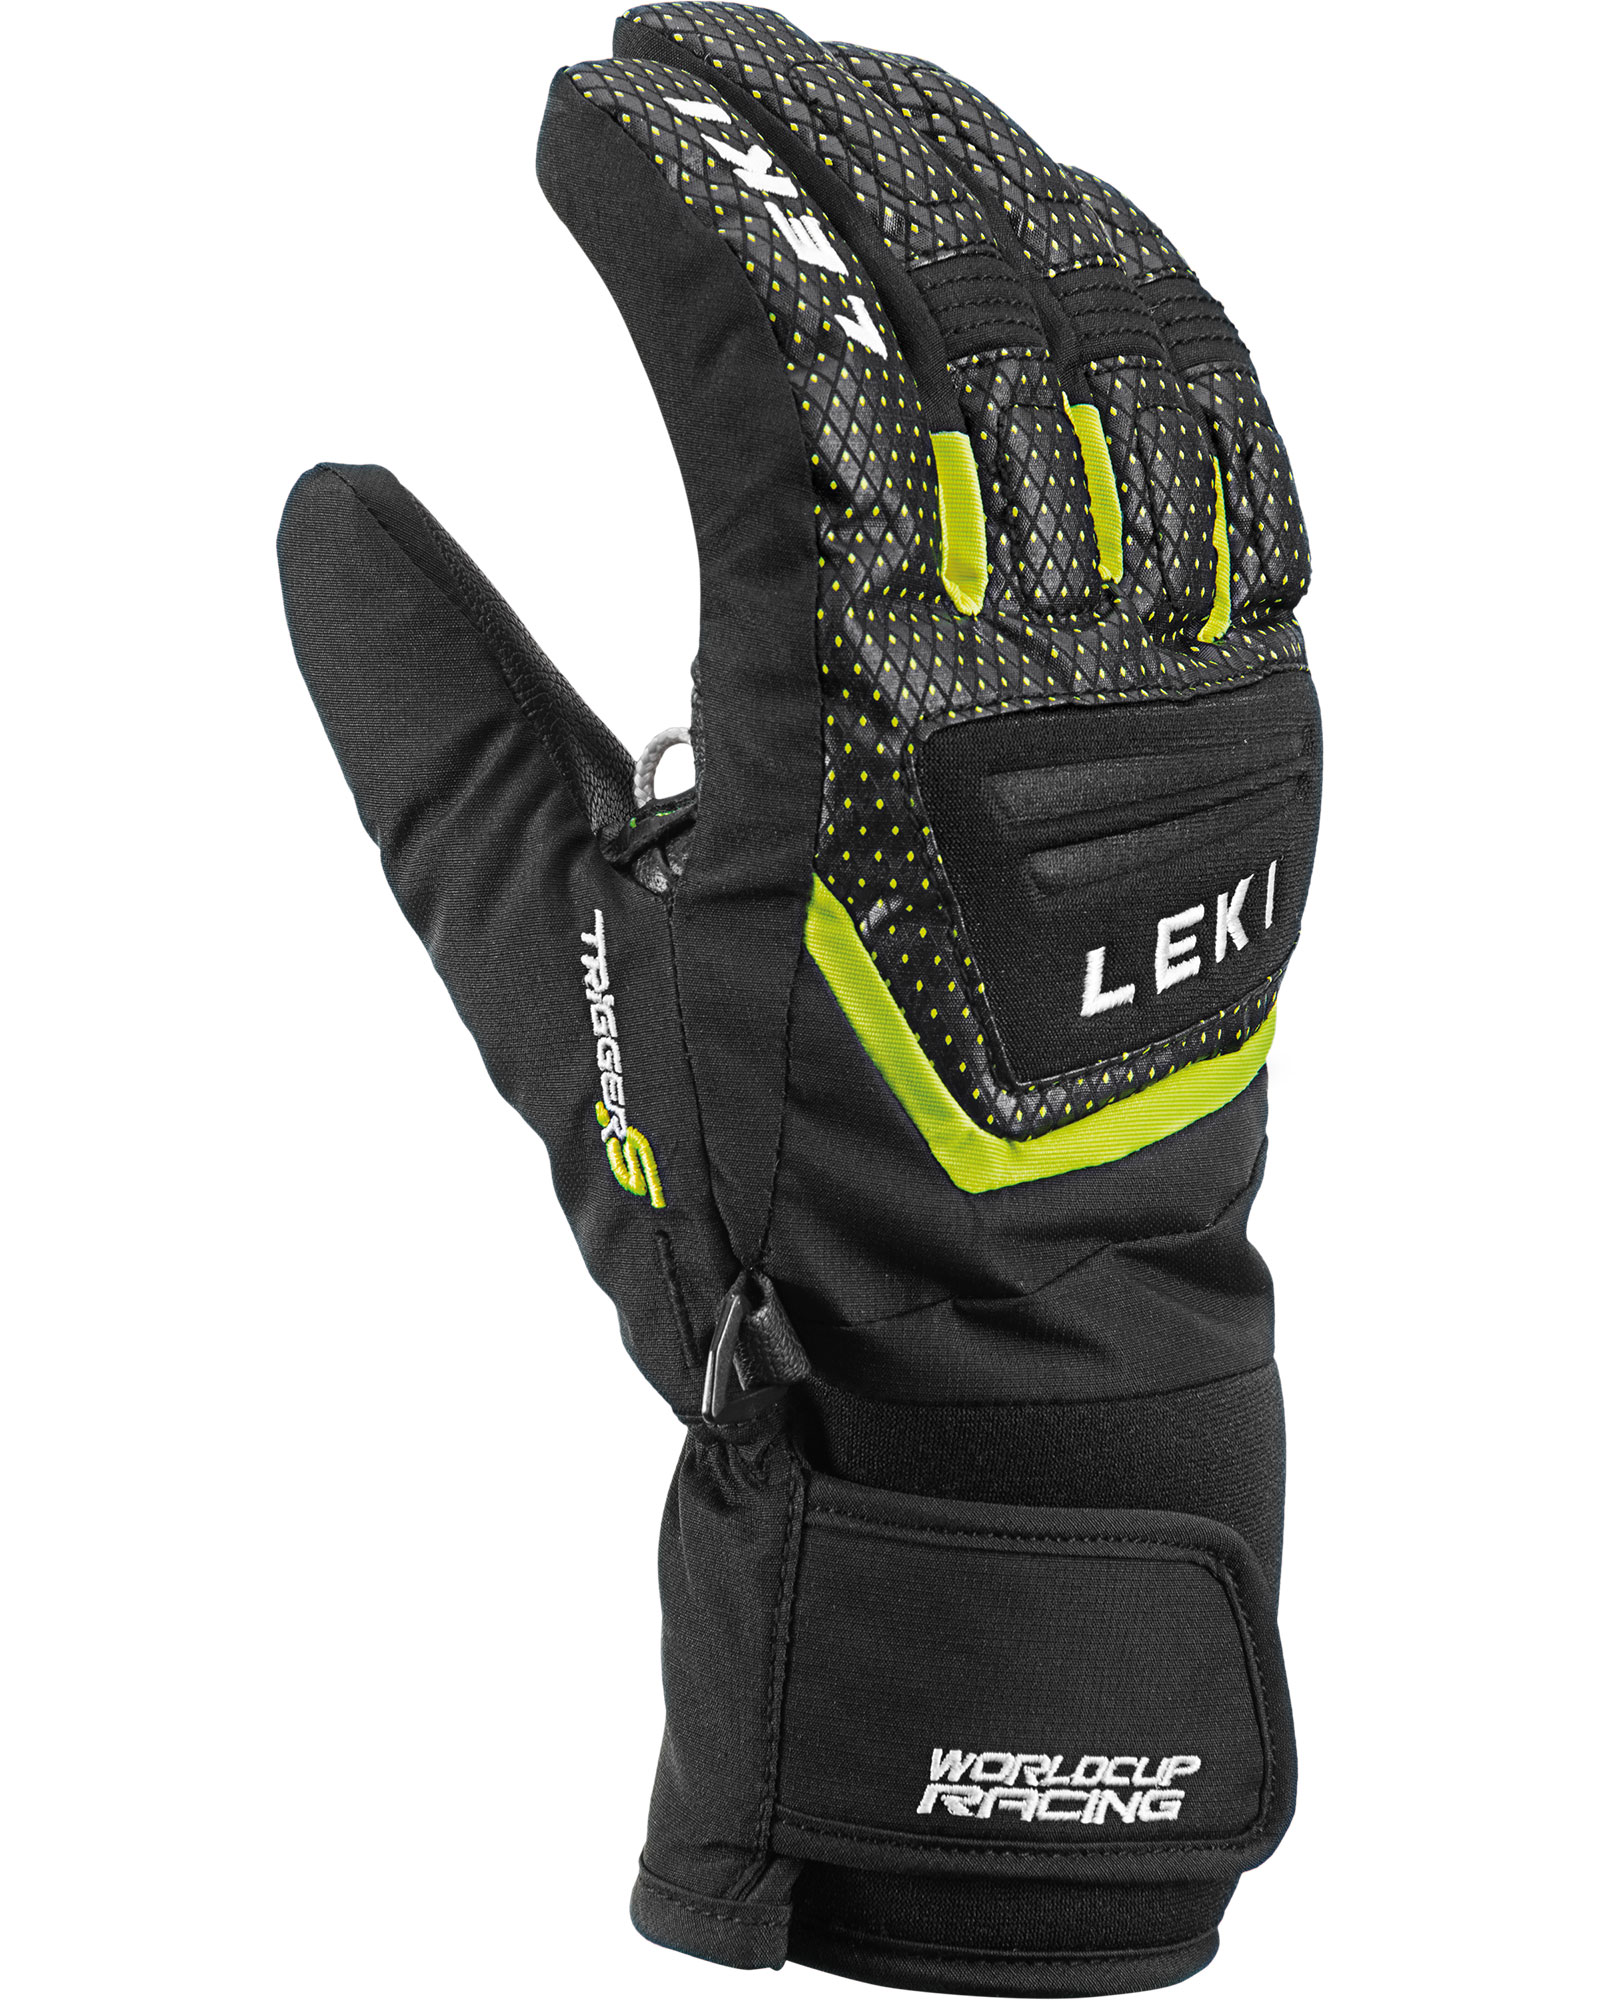 Leki Youth World Cup S Junior Gloves - Black/Ice Lemon UK 8